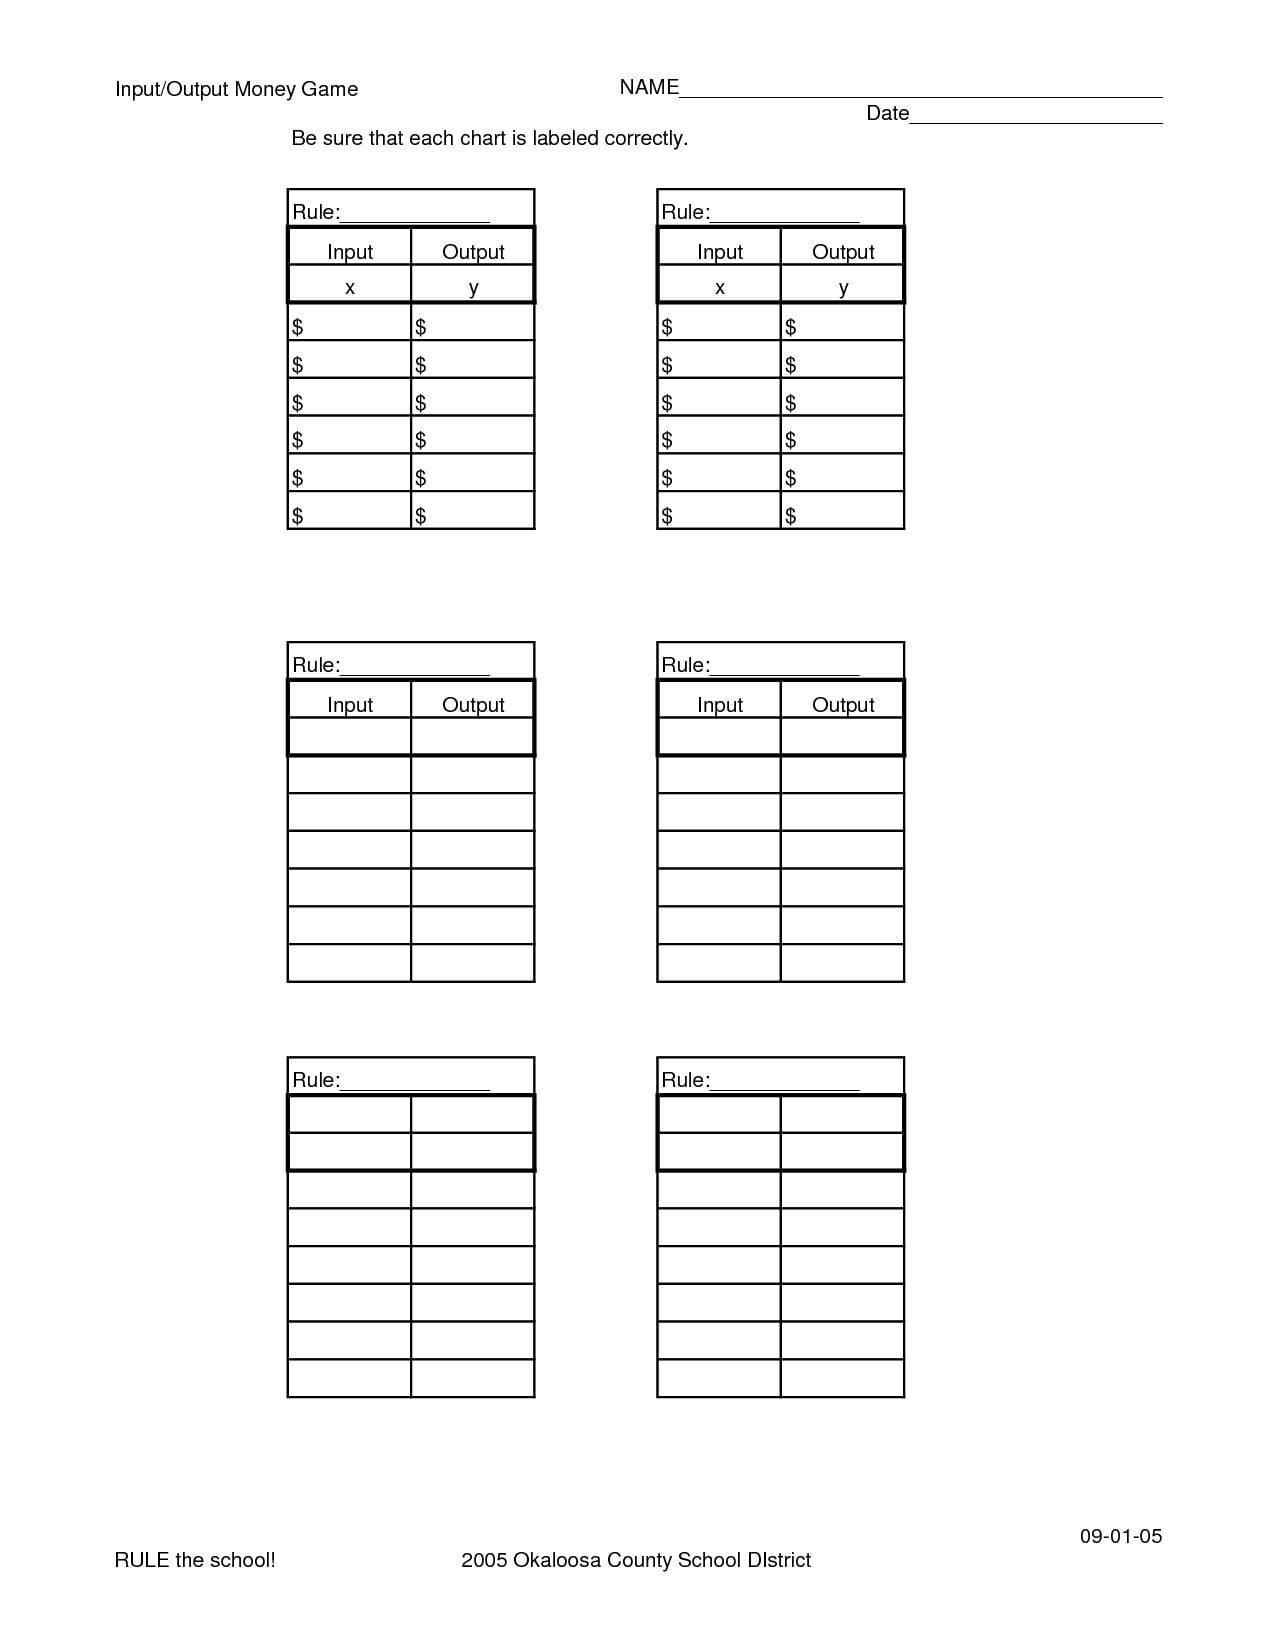 input-output-tables-worksheet-db-excel